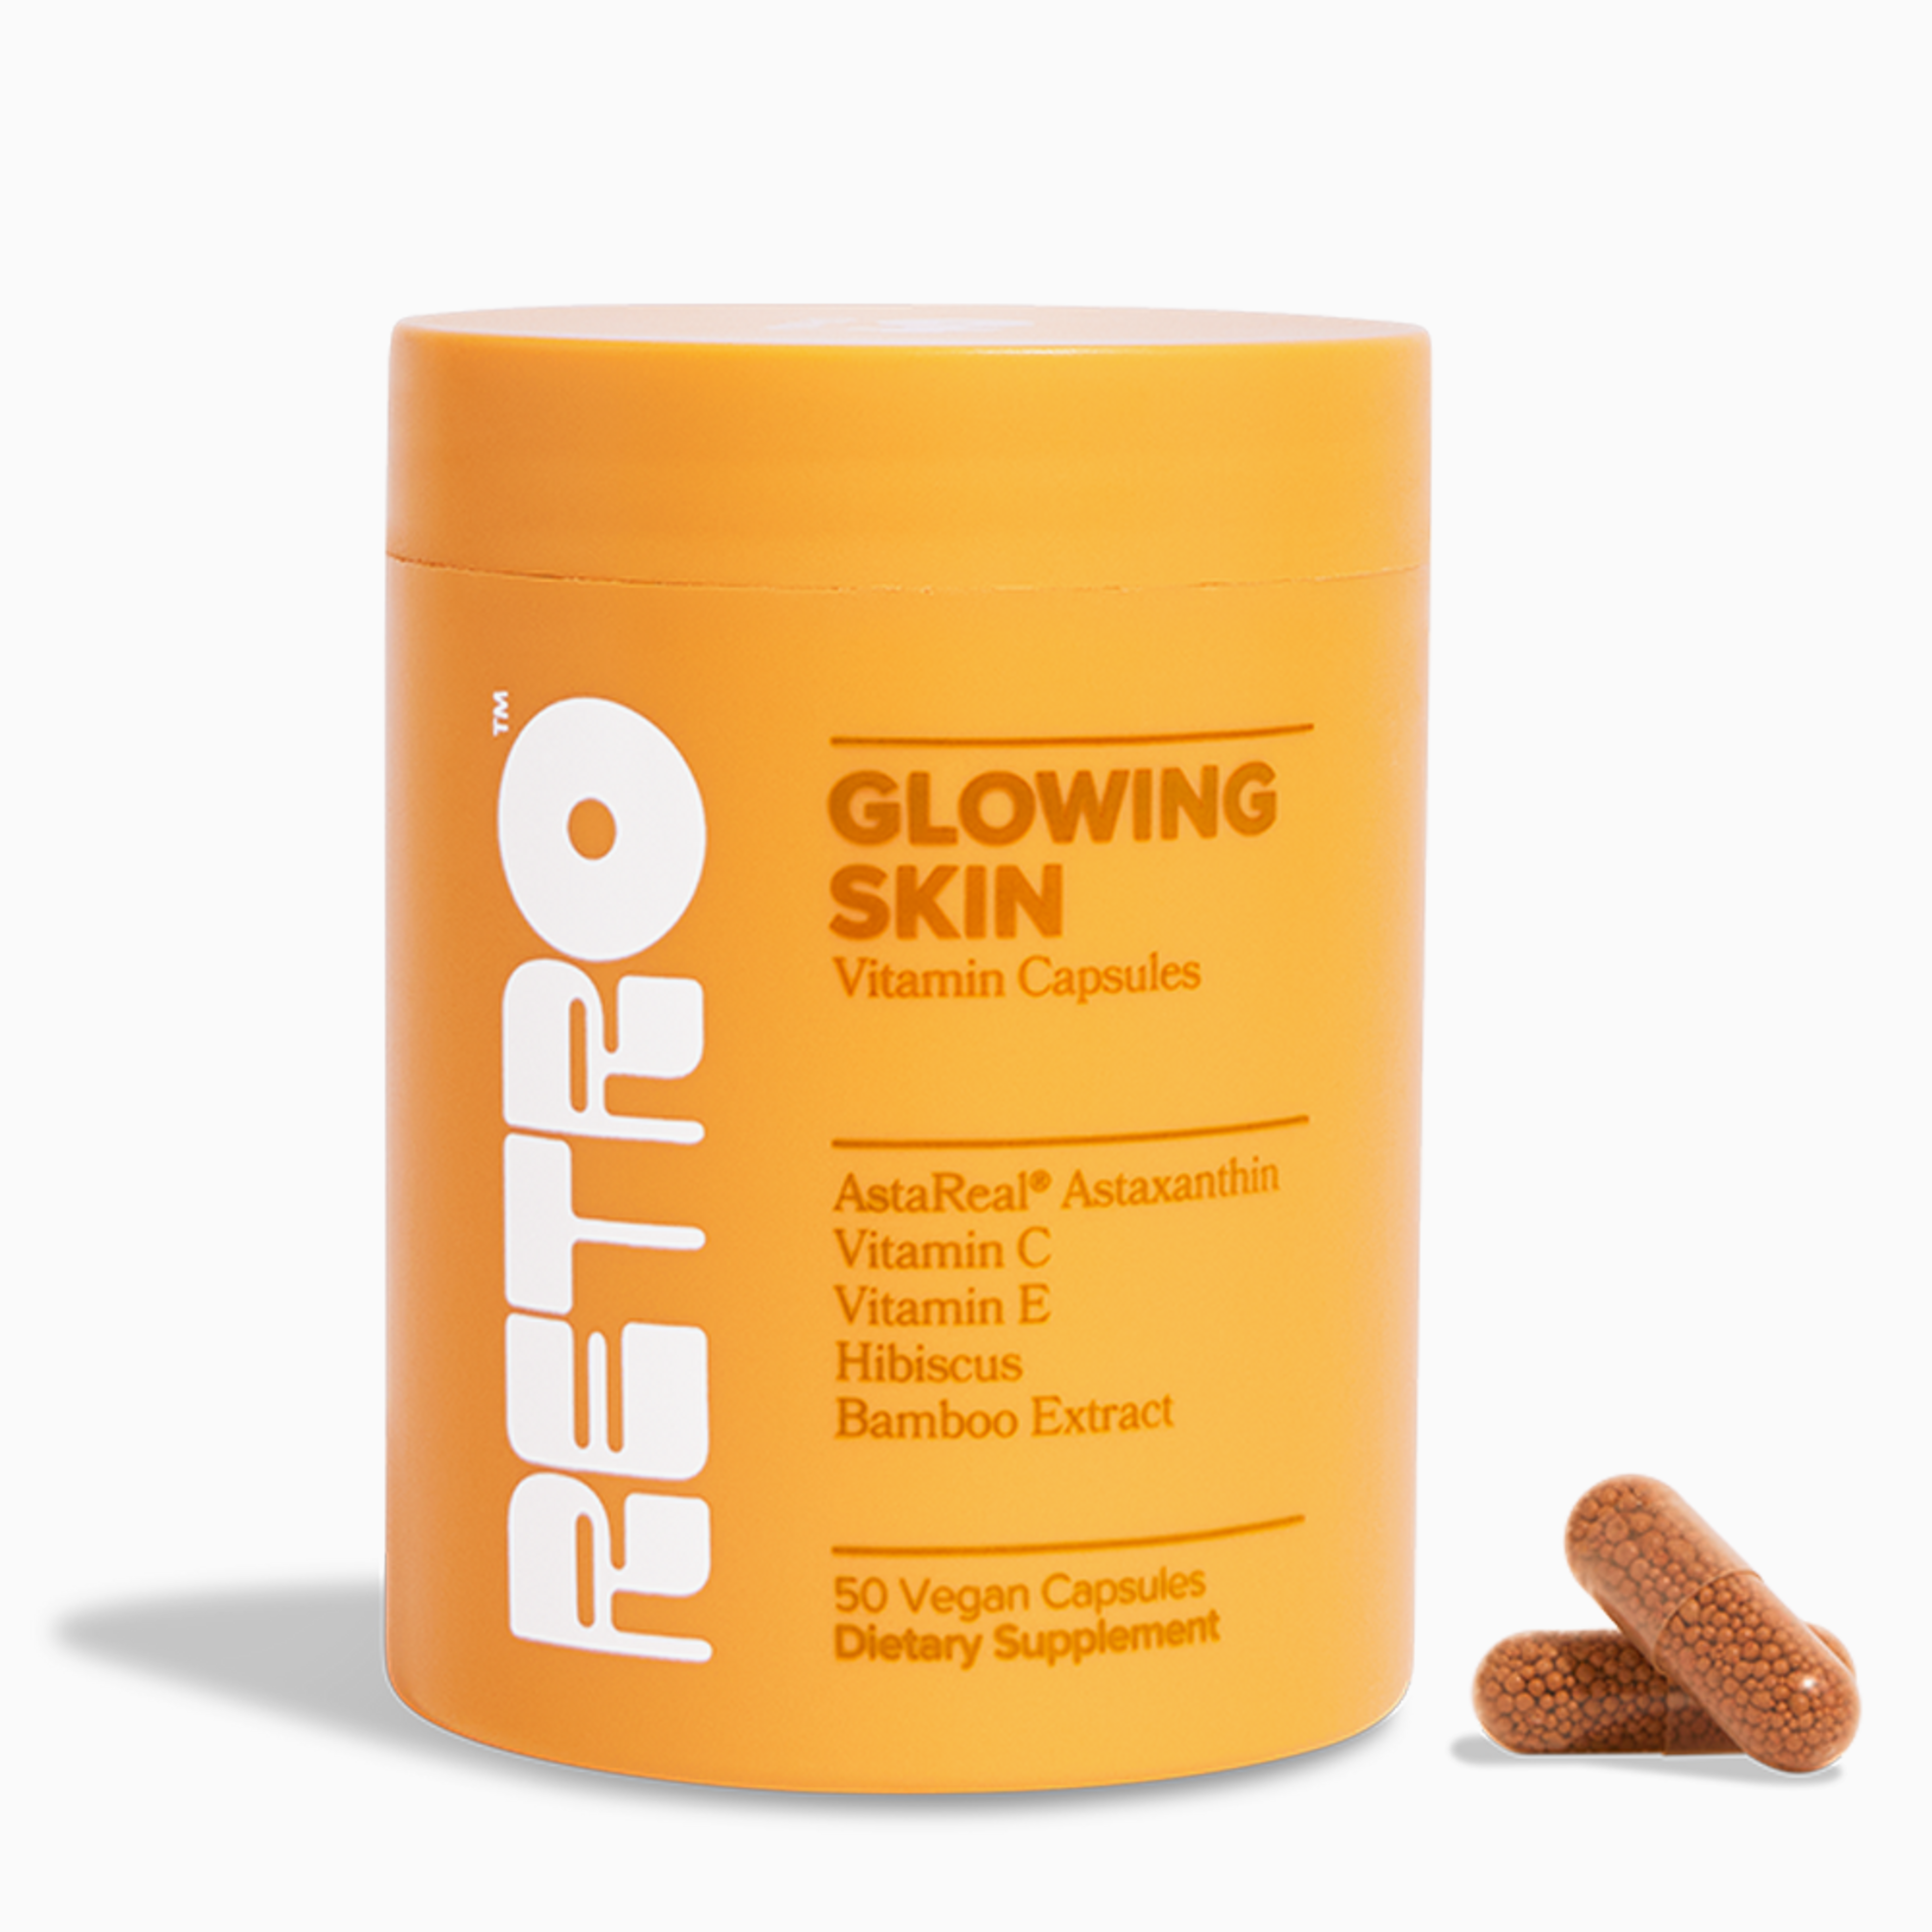 RETRO - Glowing Skin Vitamin Capsules